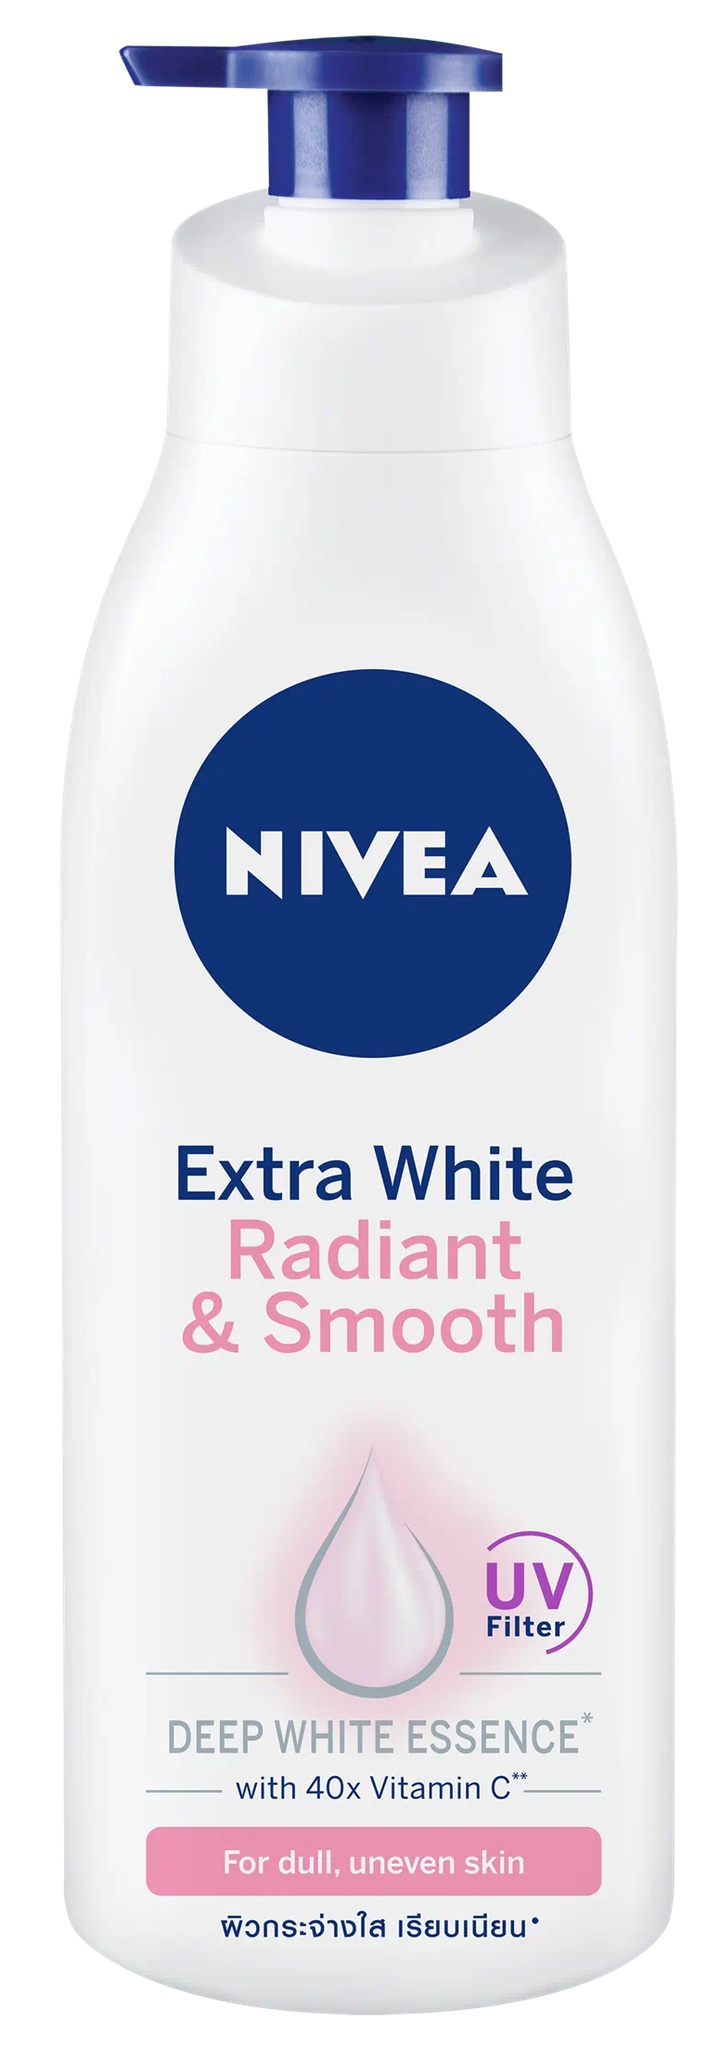 Nivea Extra White Radiant & Smooth